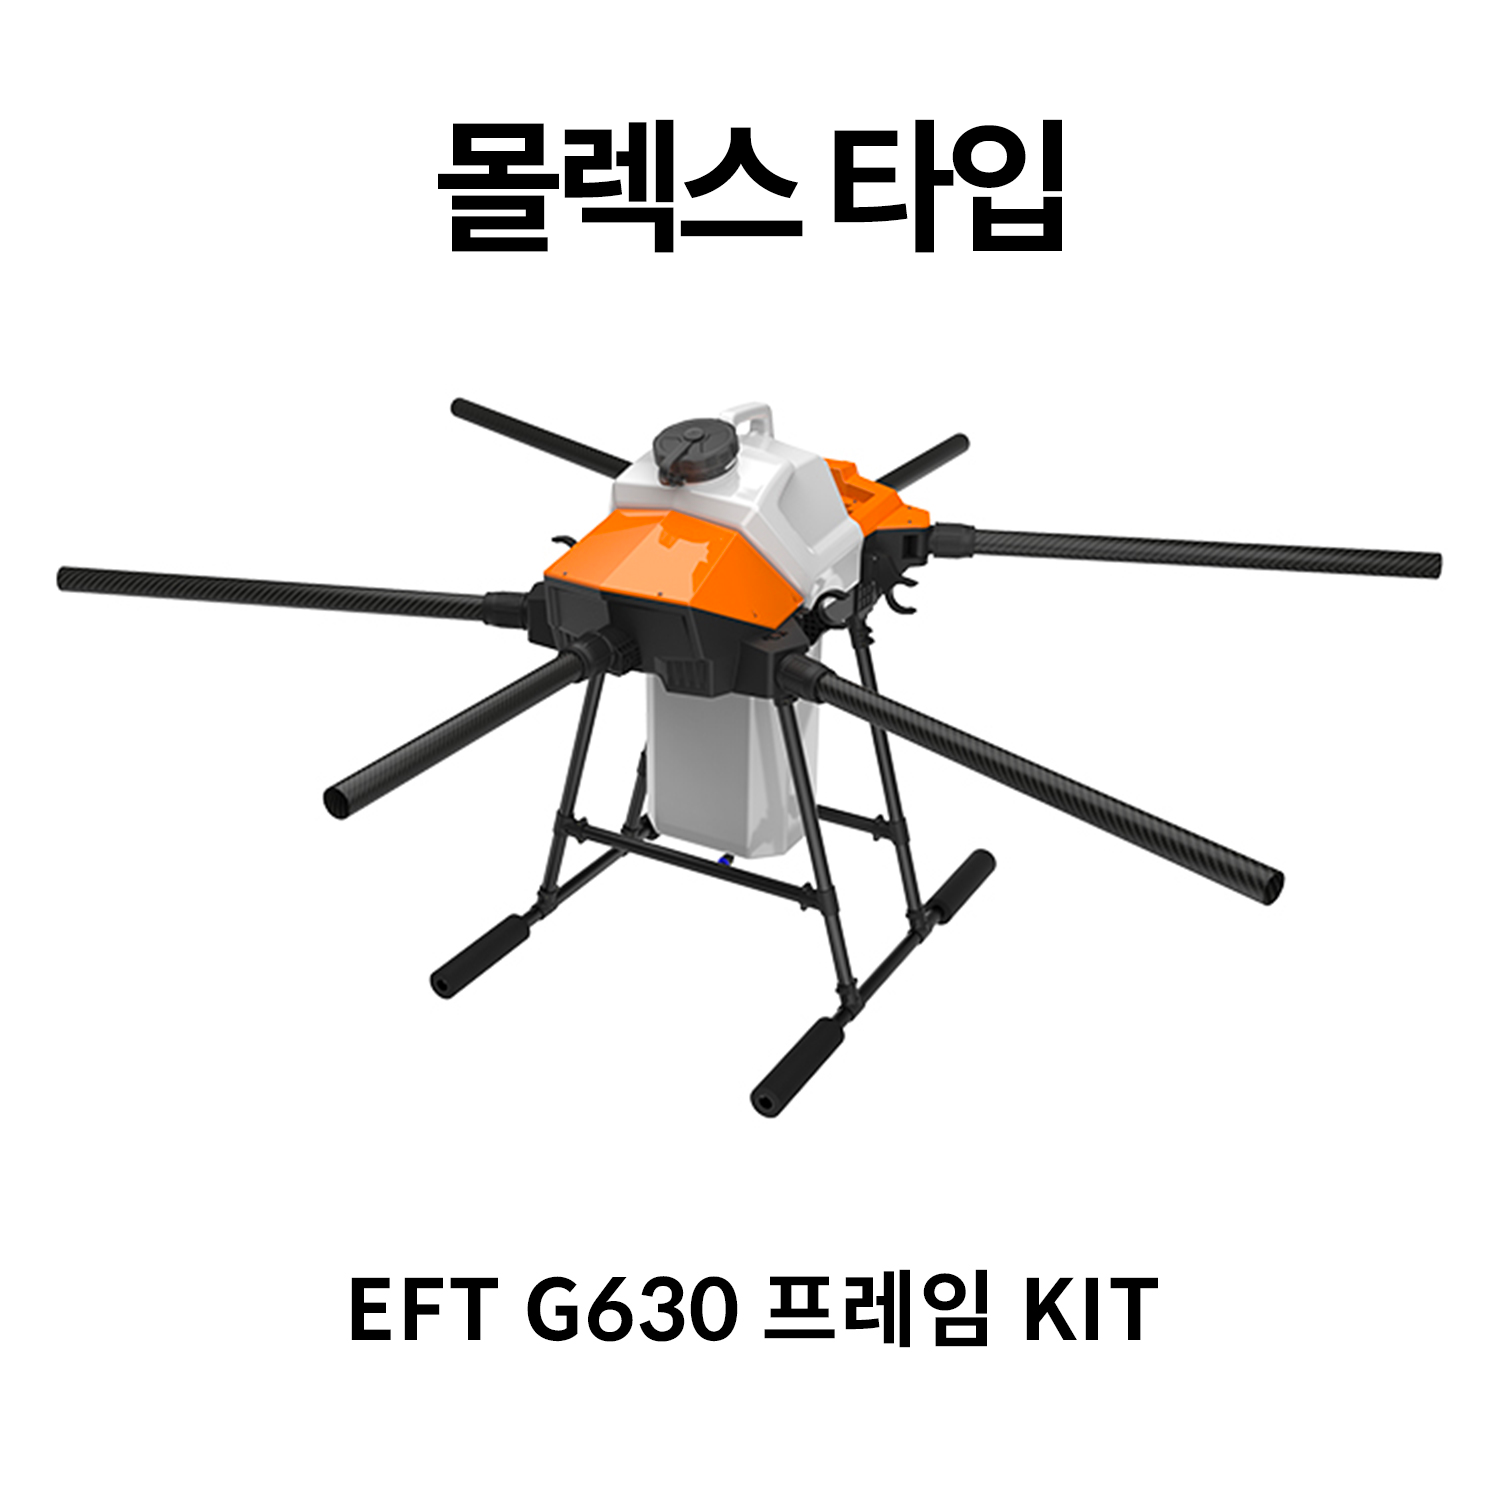 EFT G630 몰렉스 타입 프레임 KIT 농업 방제드론 - 스마트 3.0 배터리 전용 프레임 헬셀